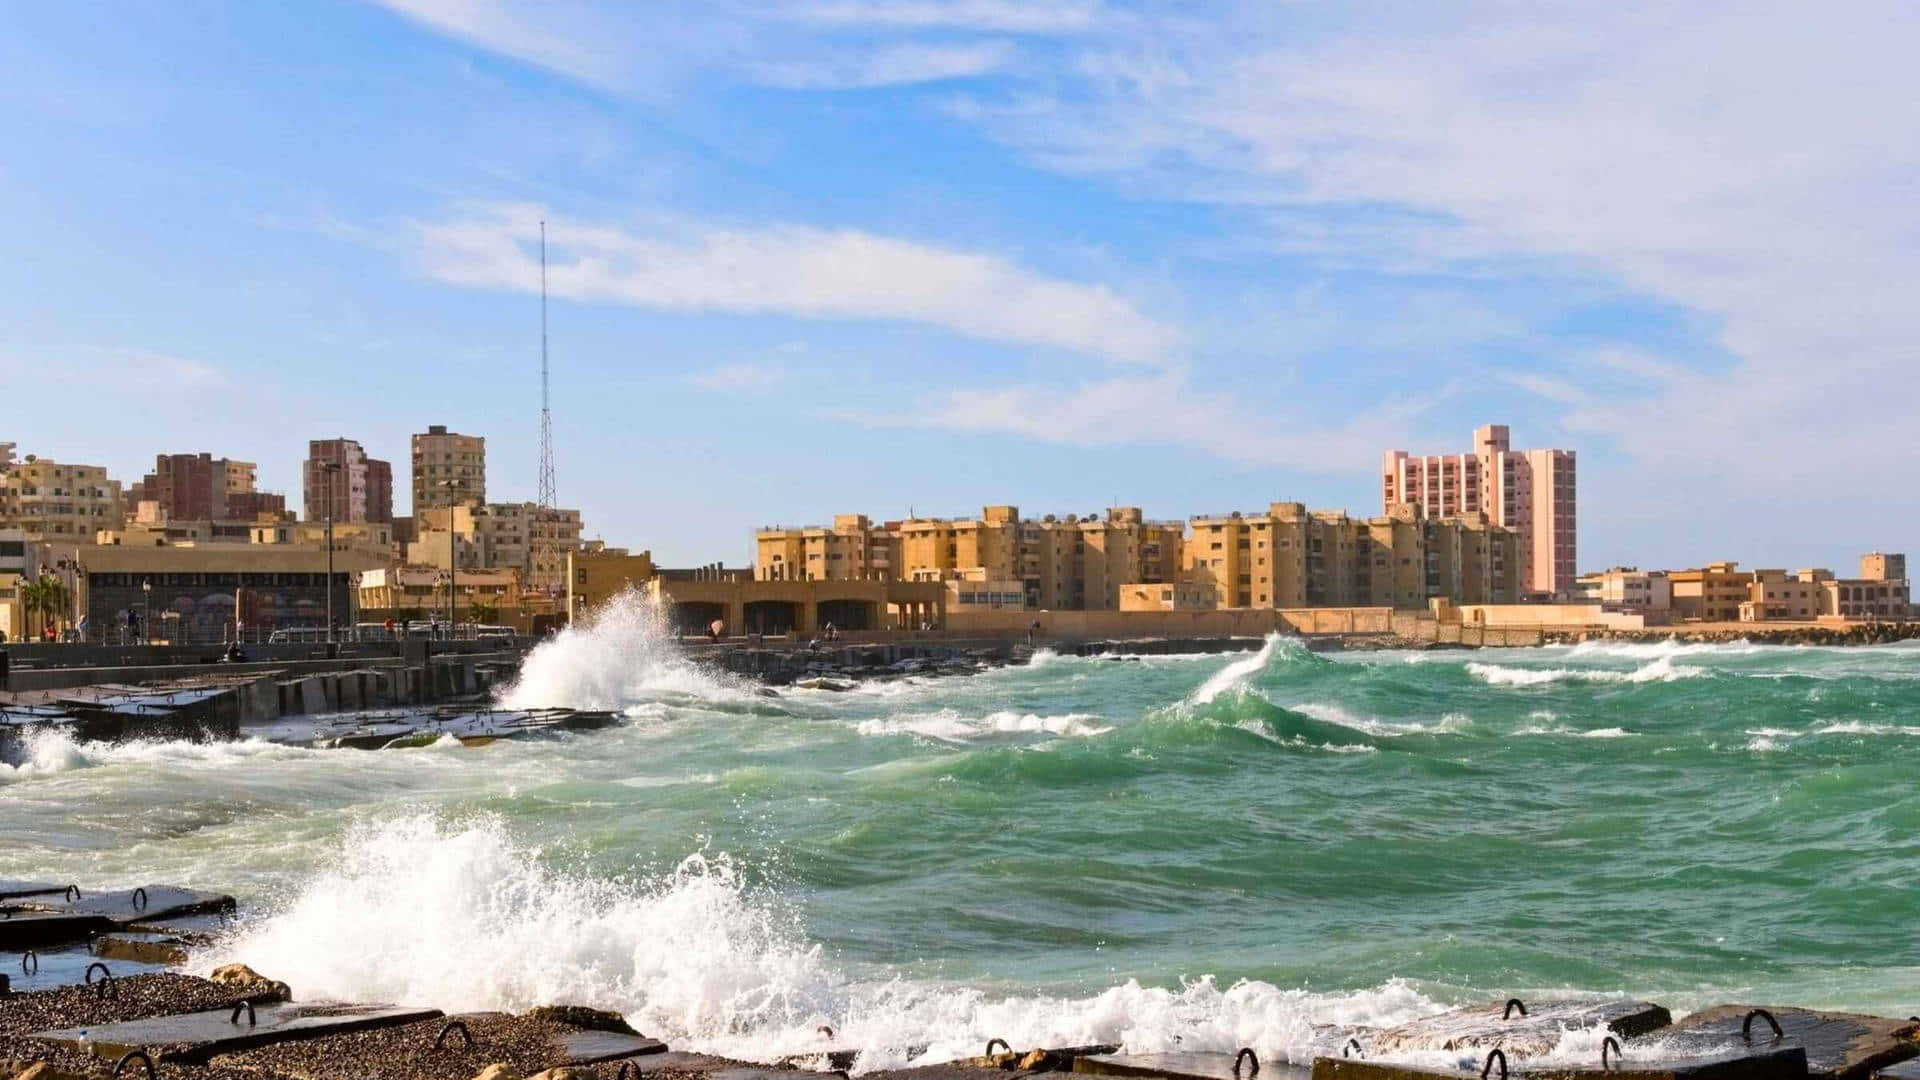 The City of Alexandria, Egypt